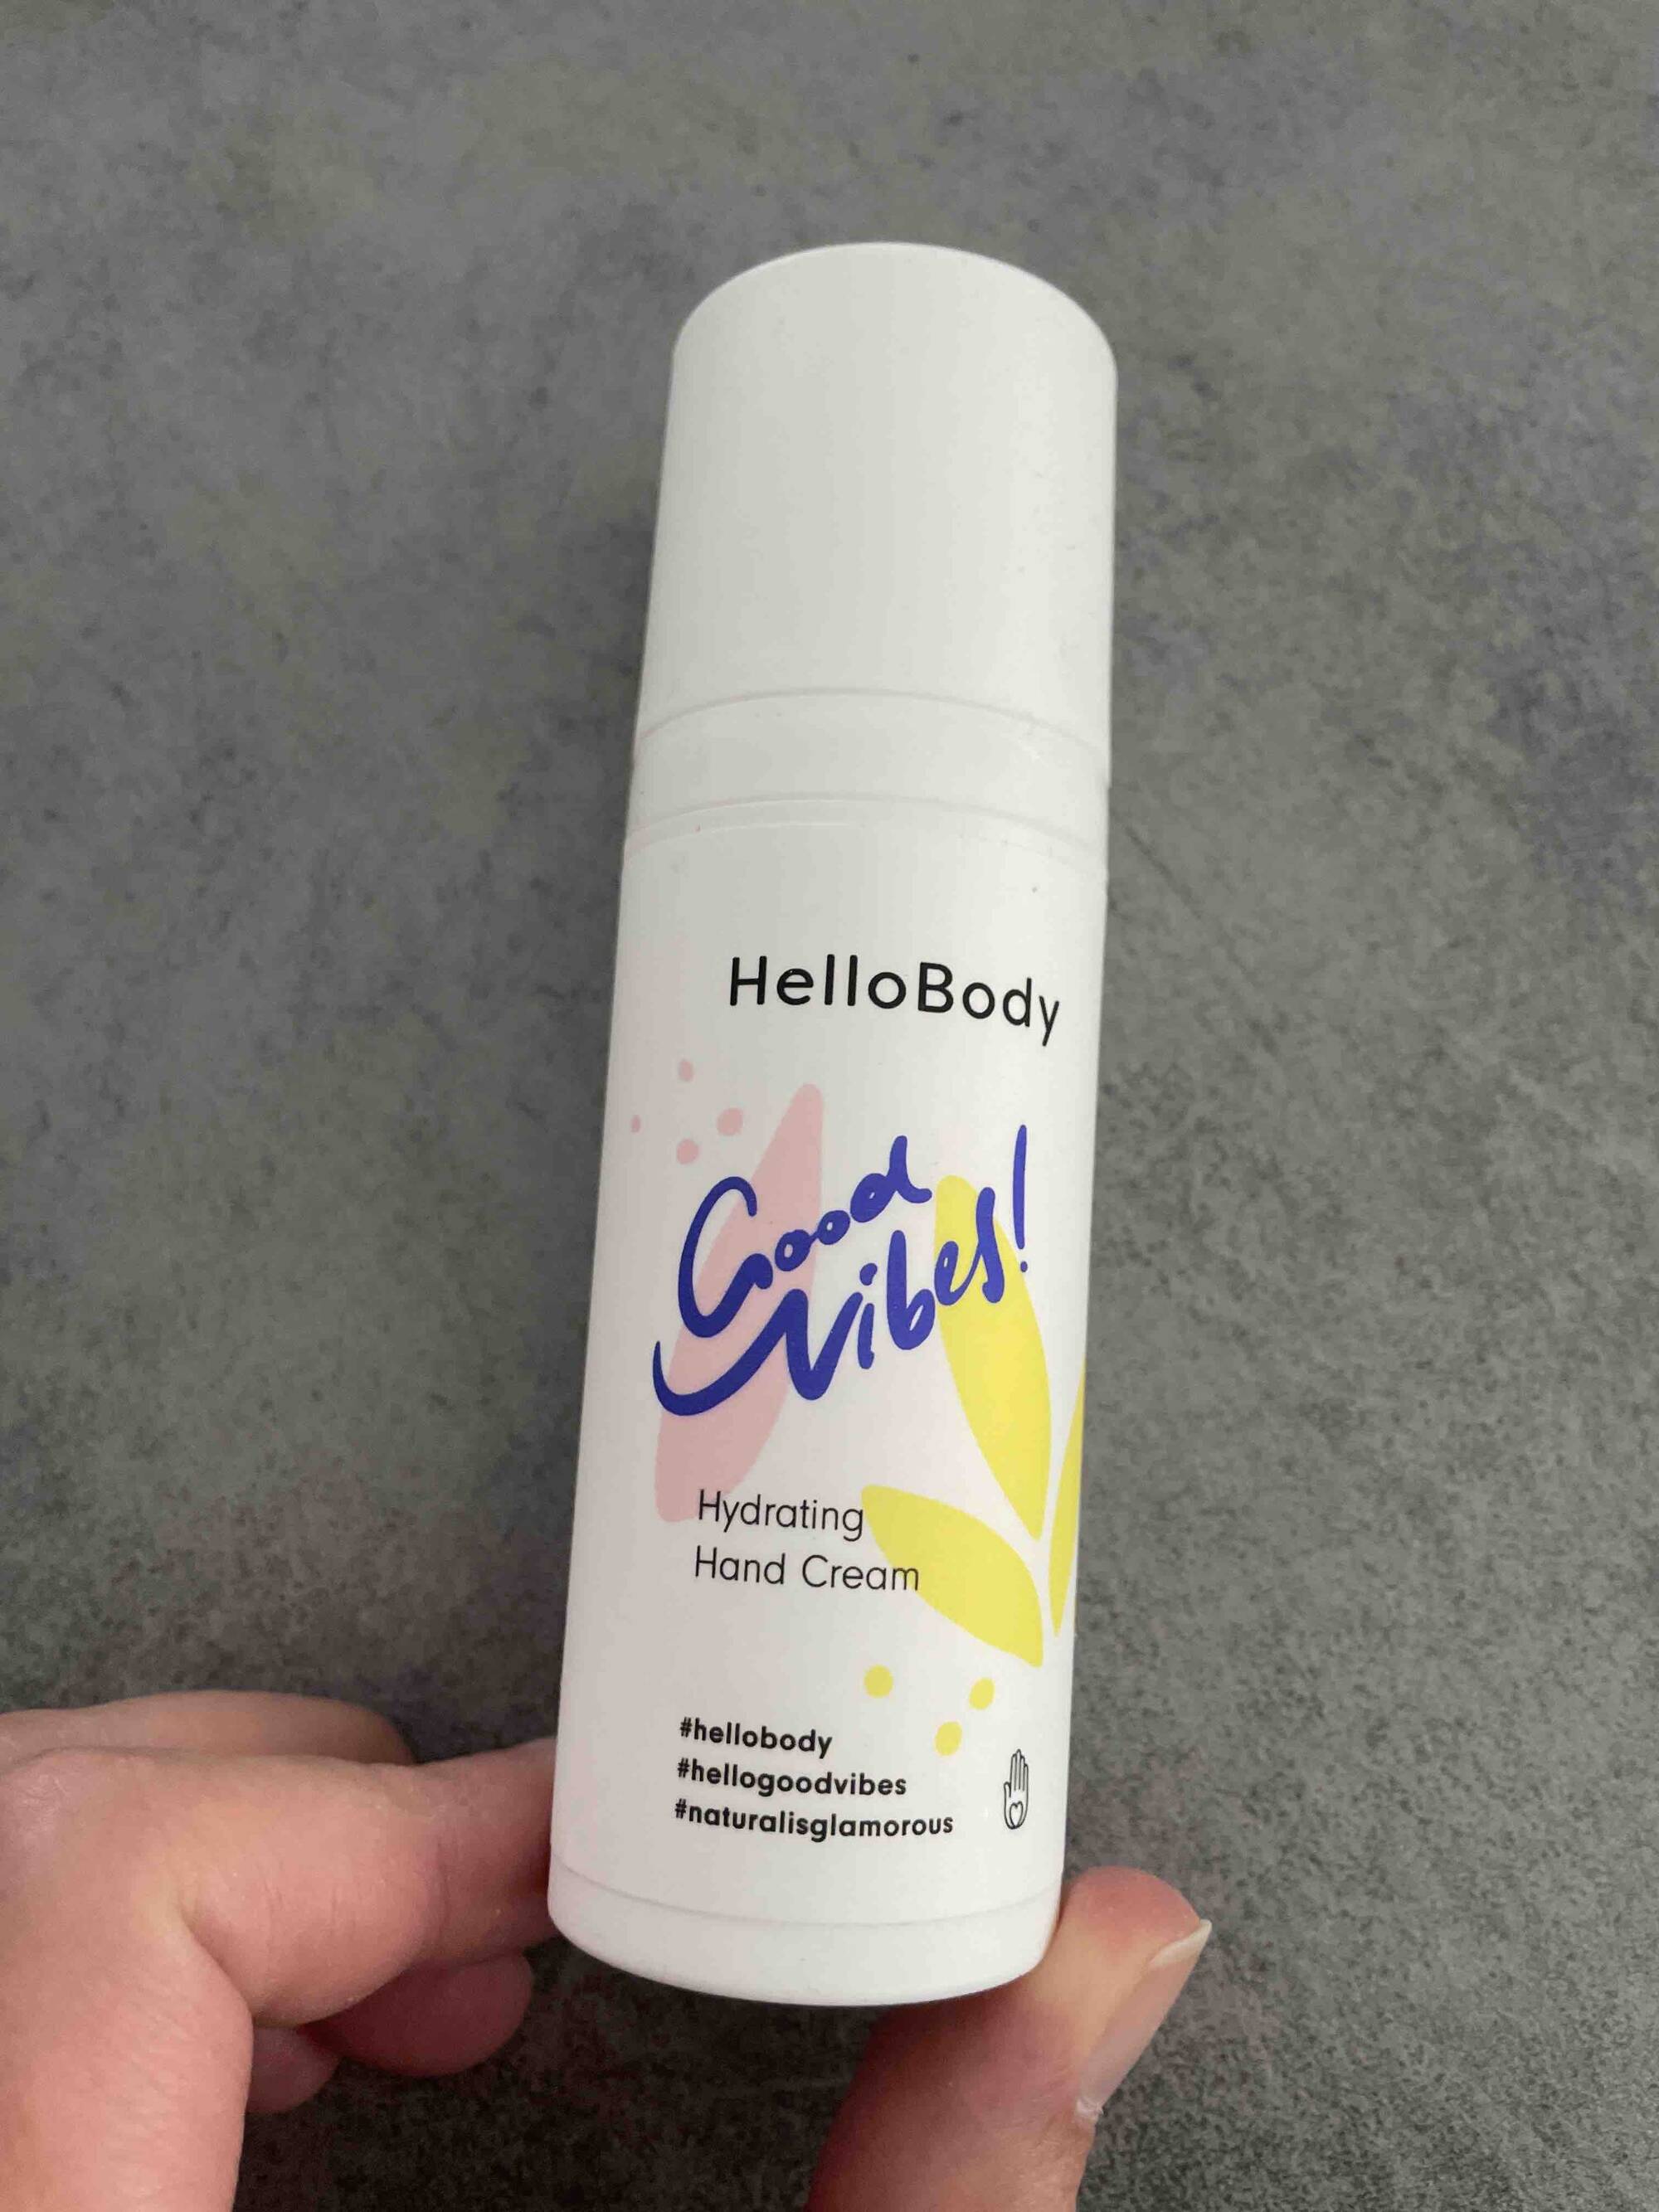 HELLOBODY - Good vibes! - Hydrating hand cream